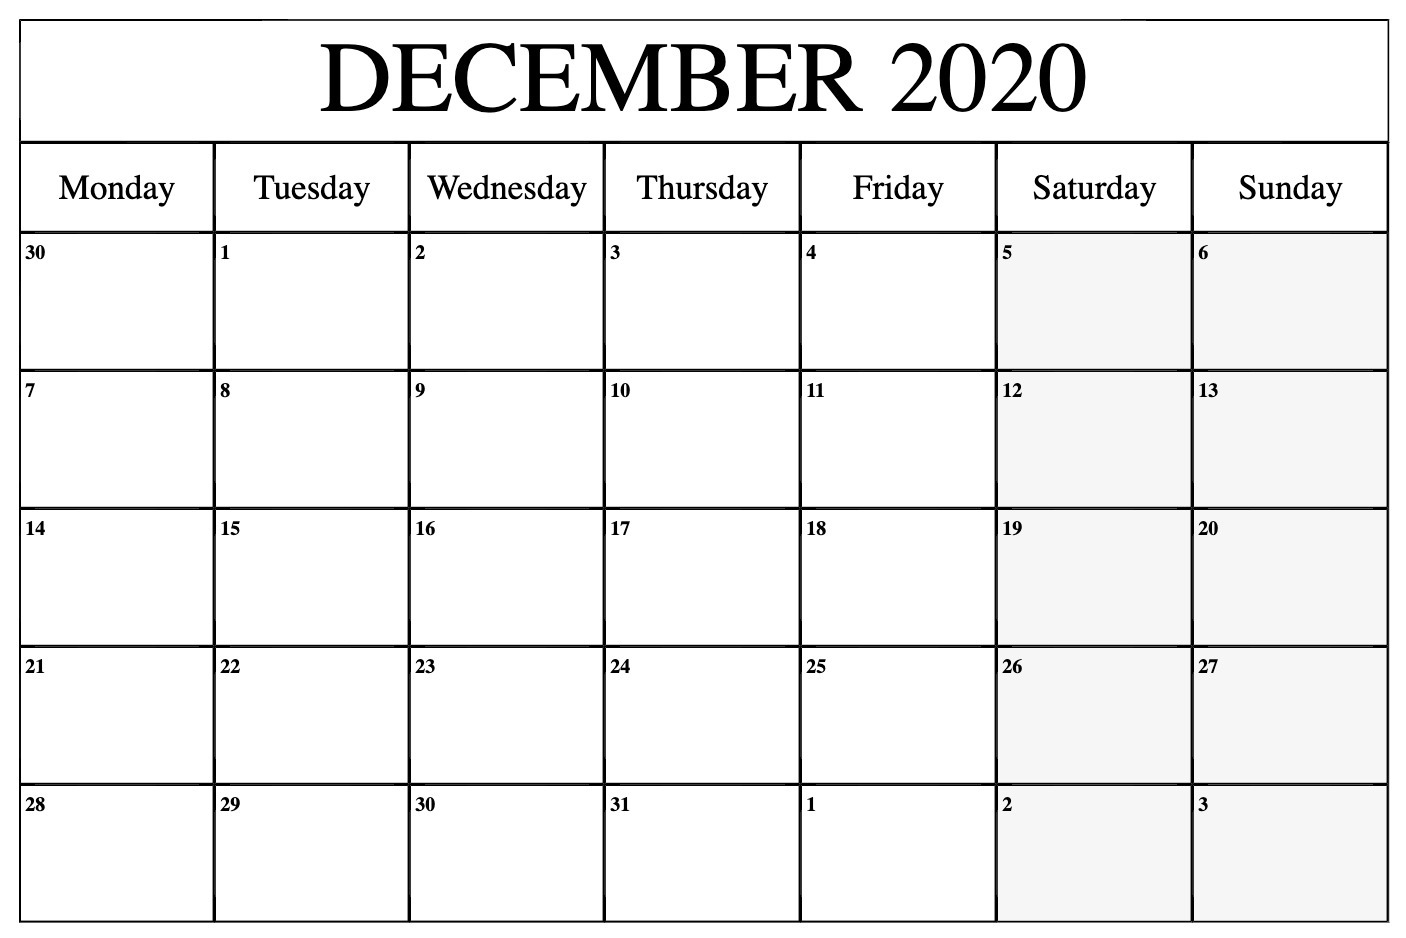 December 2020 Calendar Template Word, Pdf, Excel Format